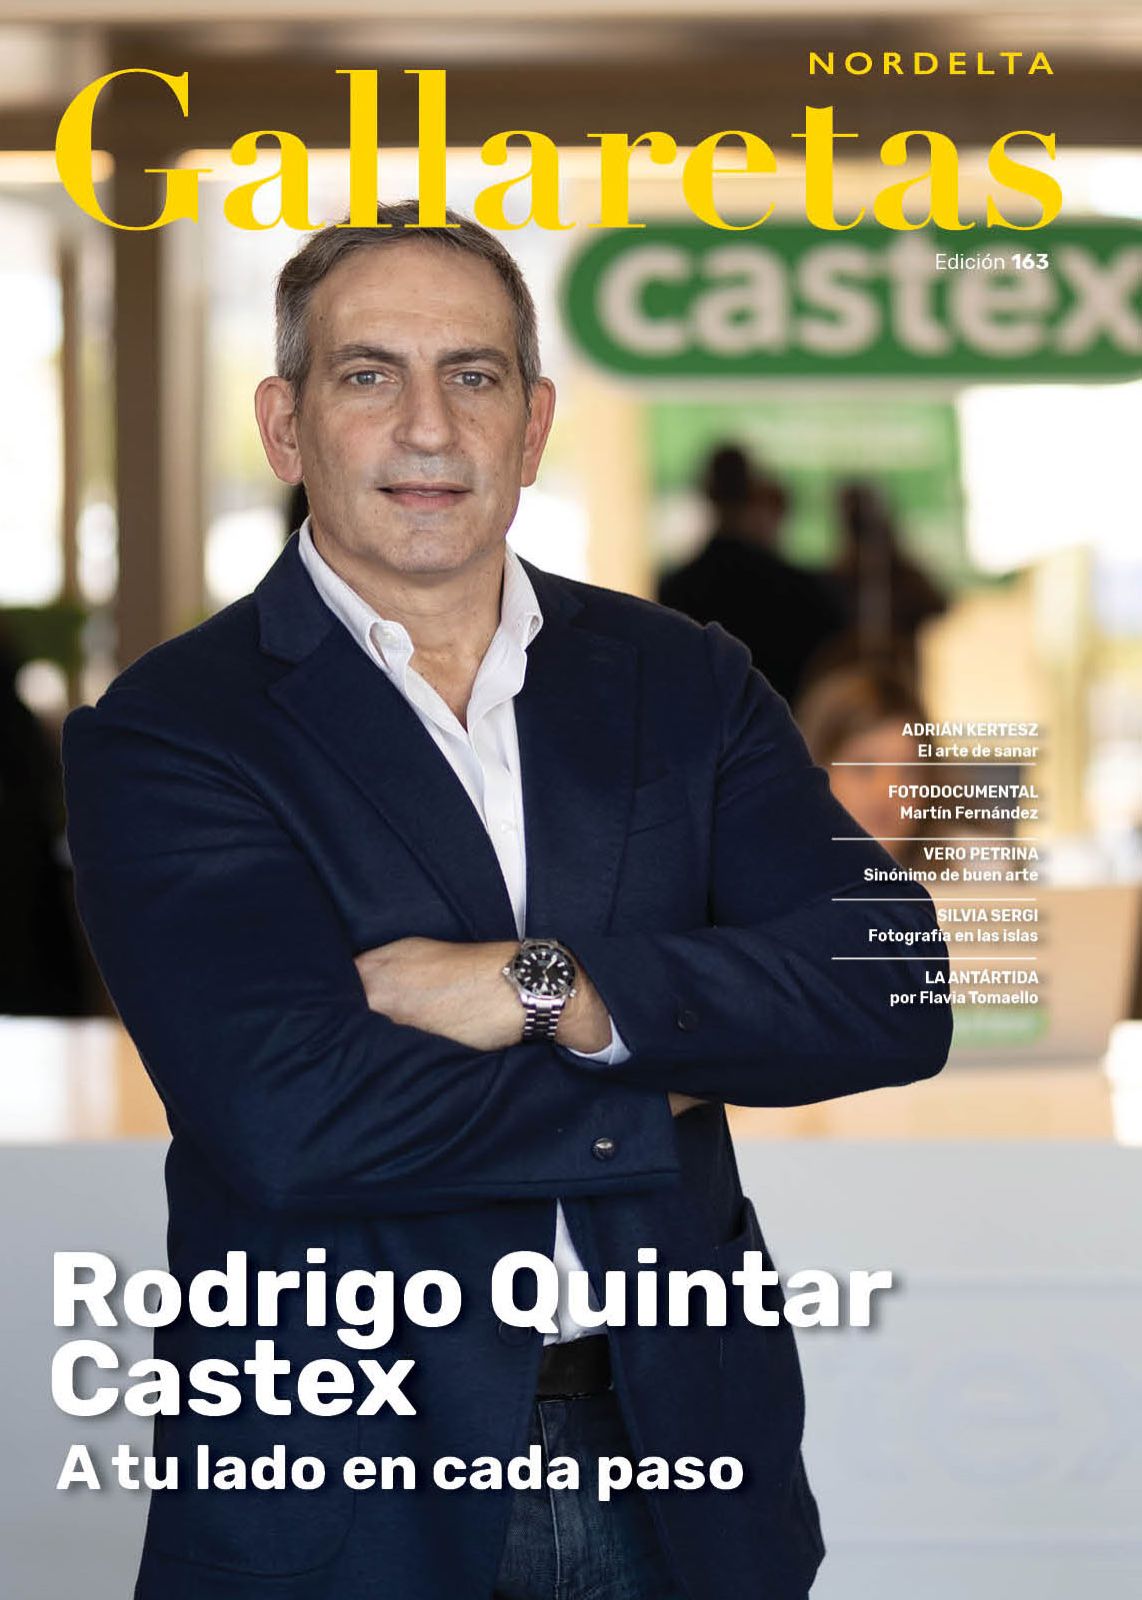 Rodrigo Quintar CASTEX: A tu lado en cada paso